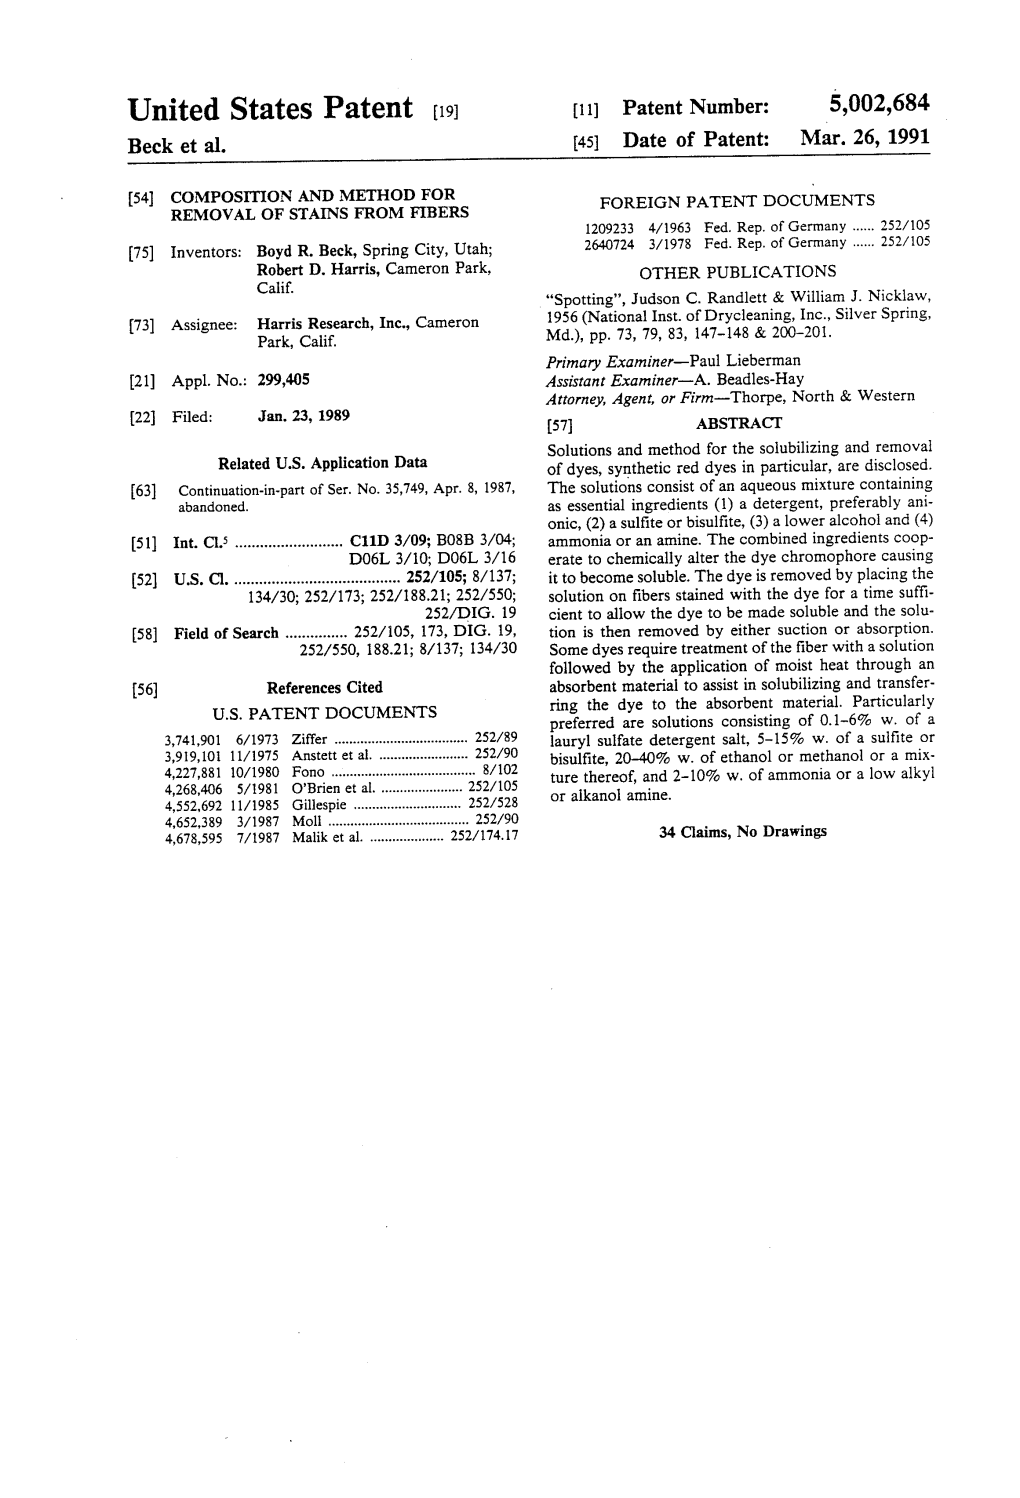 United States Patent (19) (11) Patent Number: 5,002,684 Beck Et Al